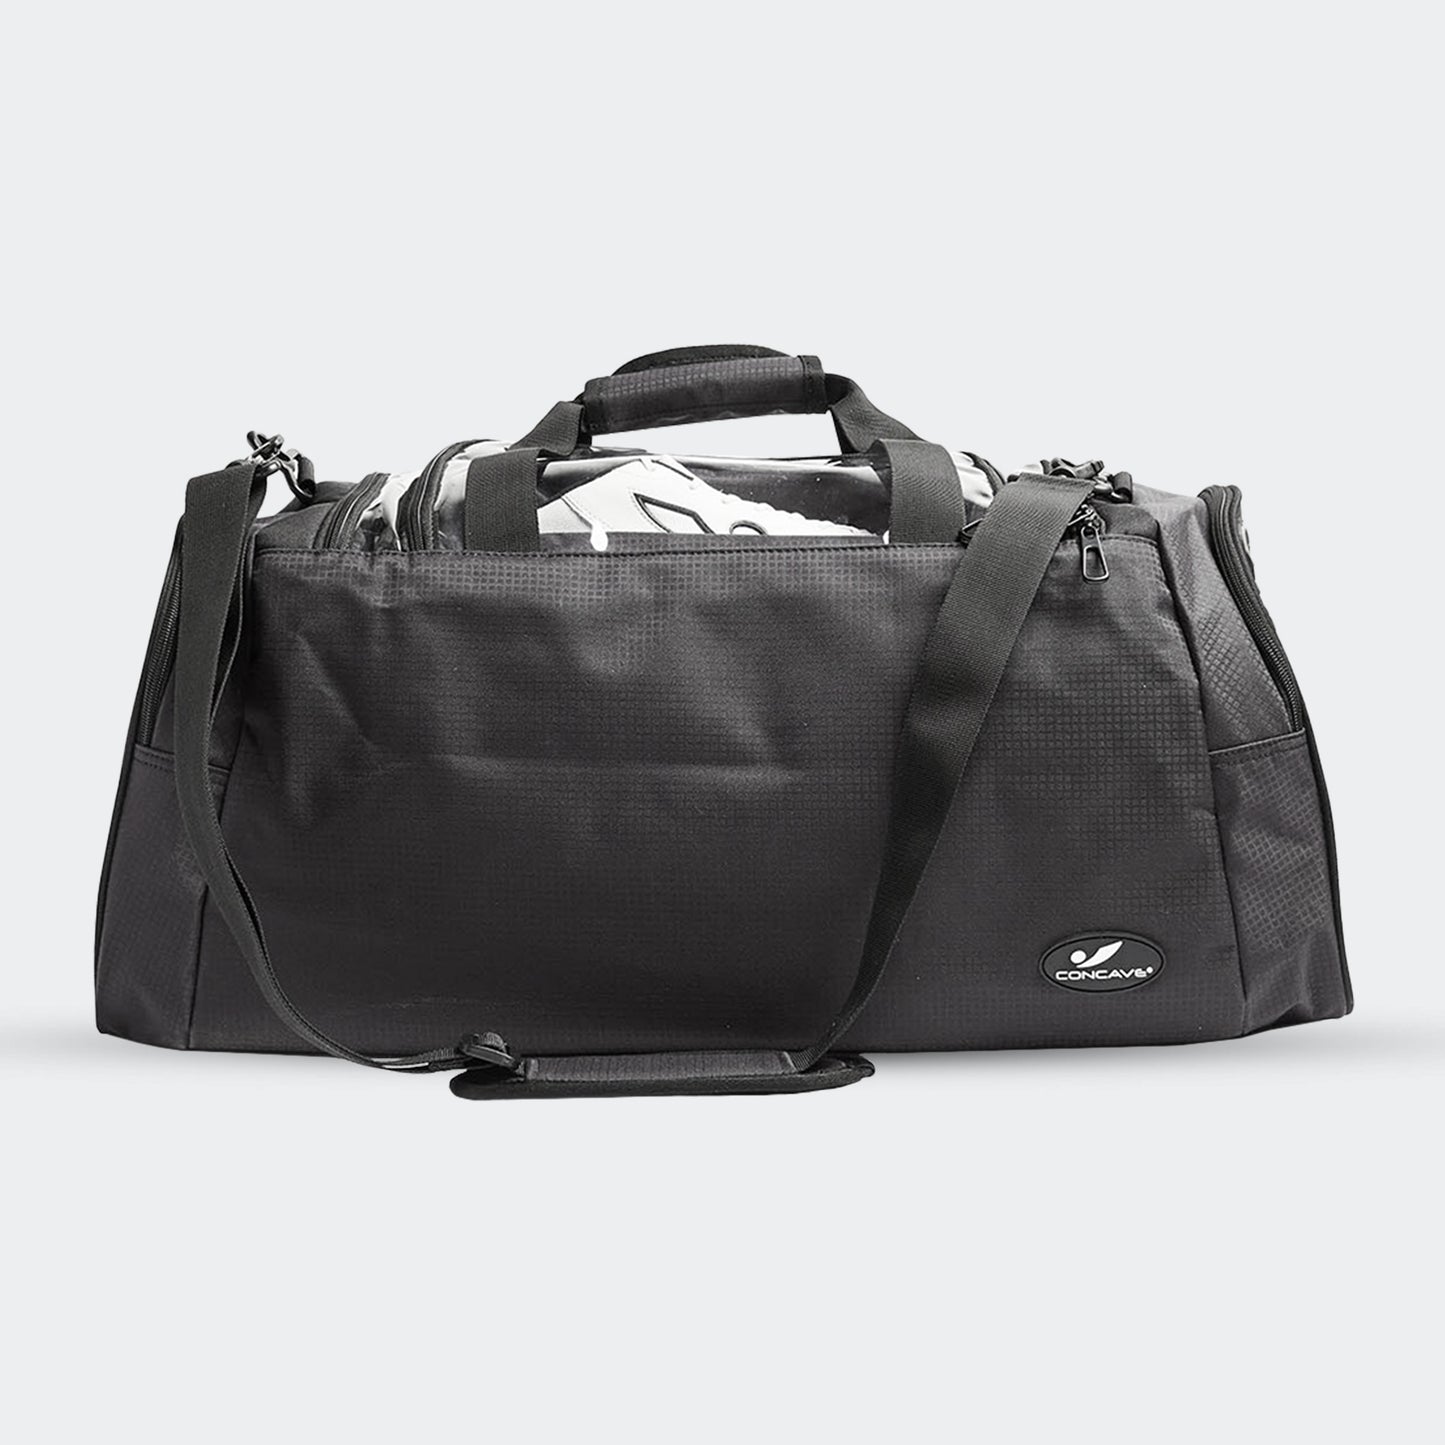 Concave Travel Bag - Black/Silver